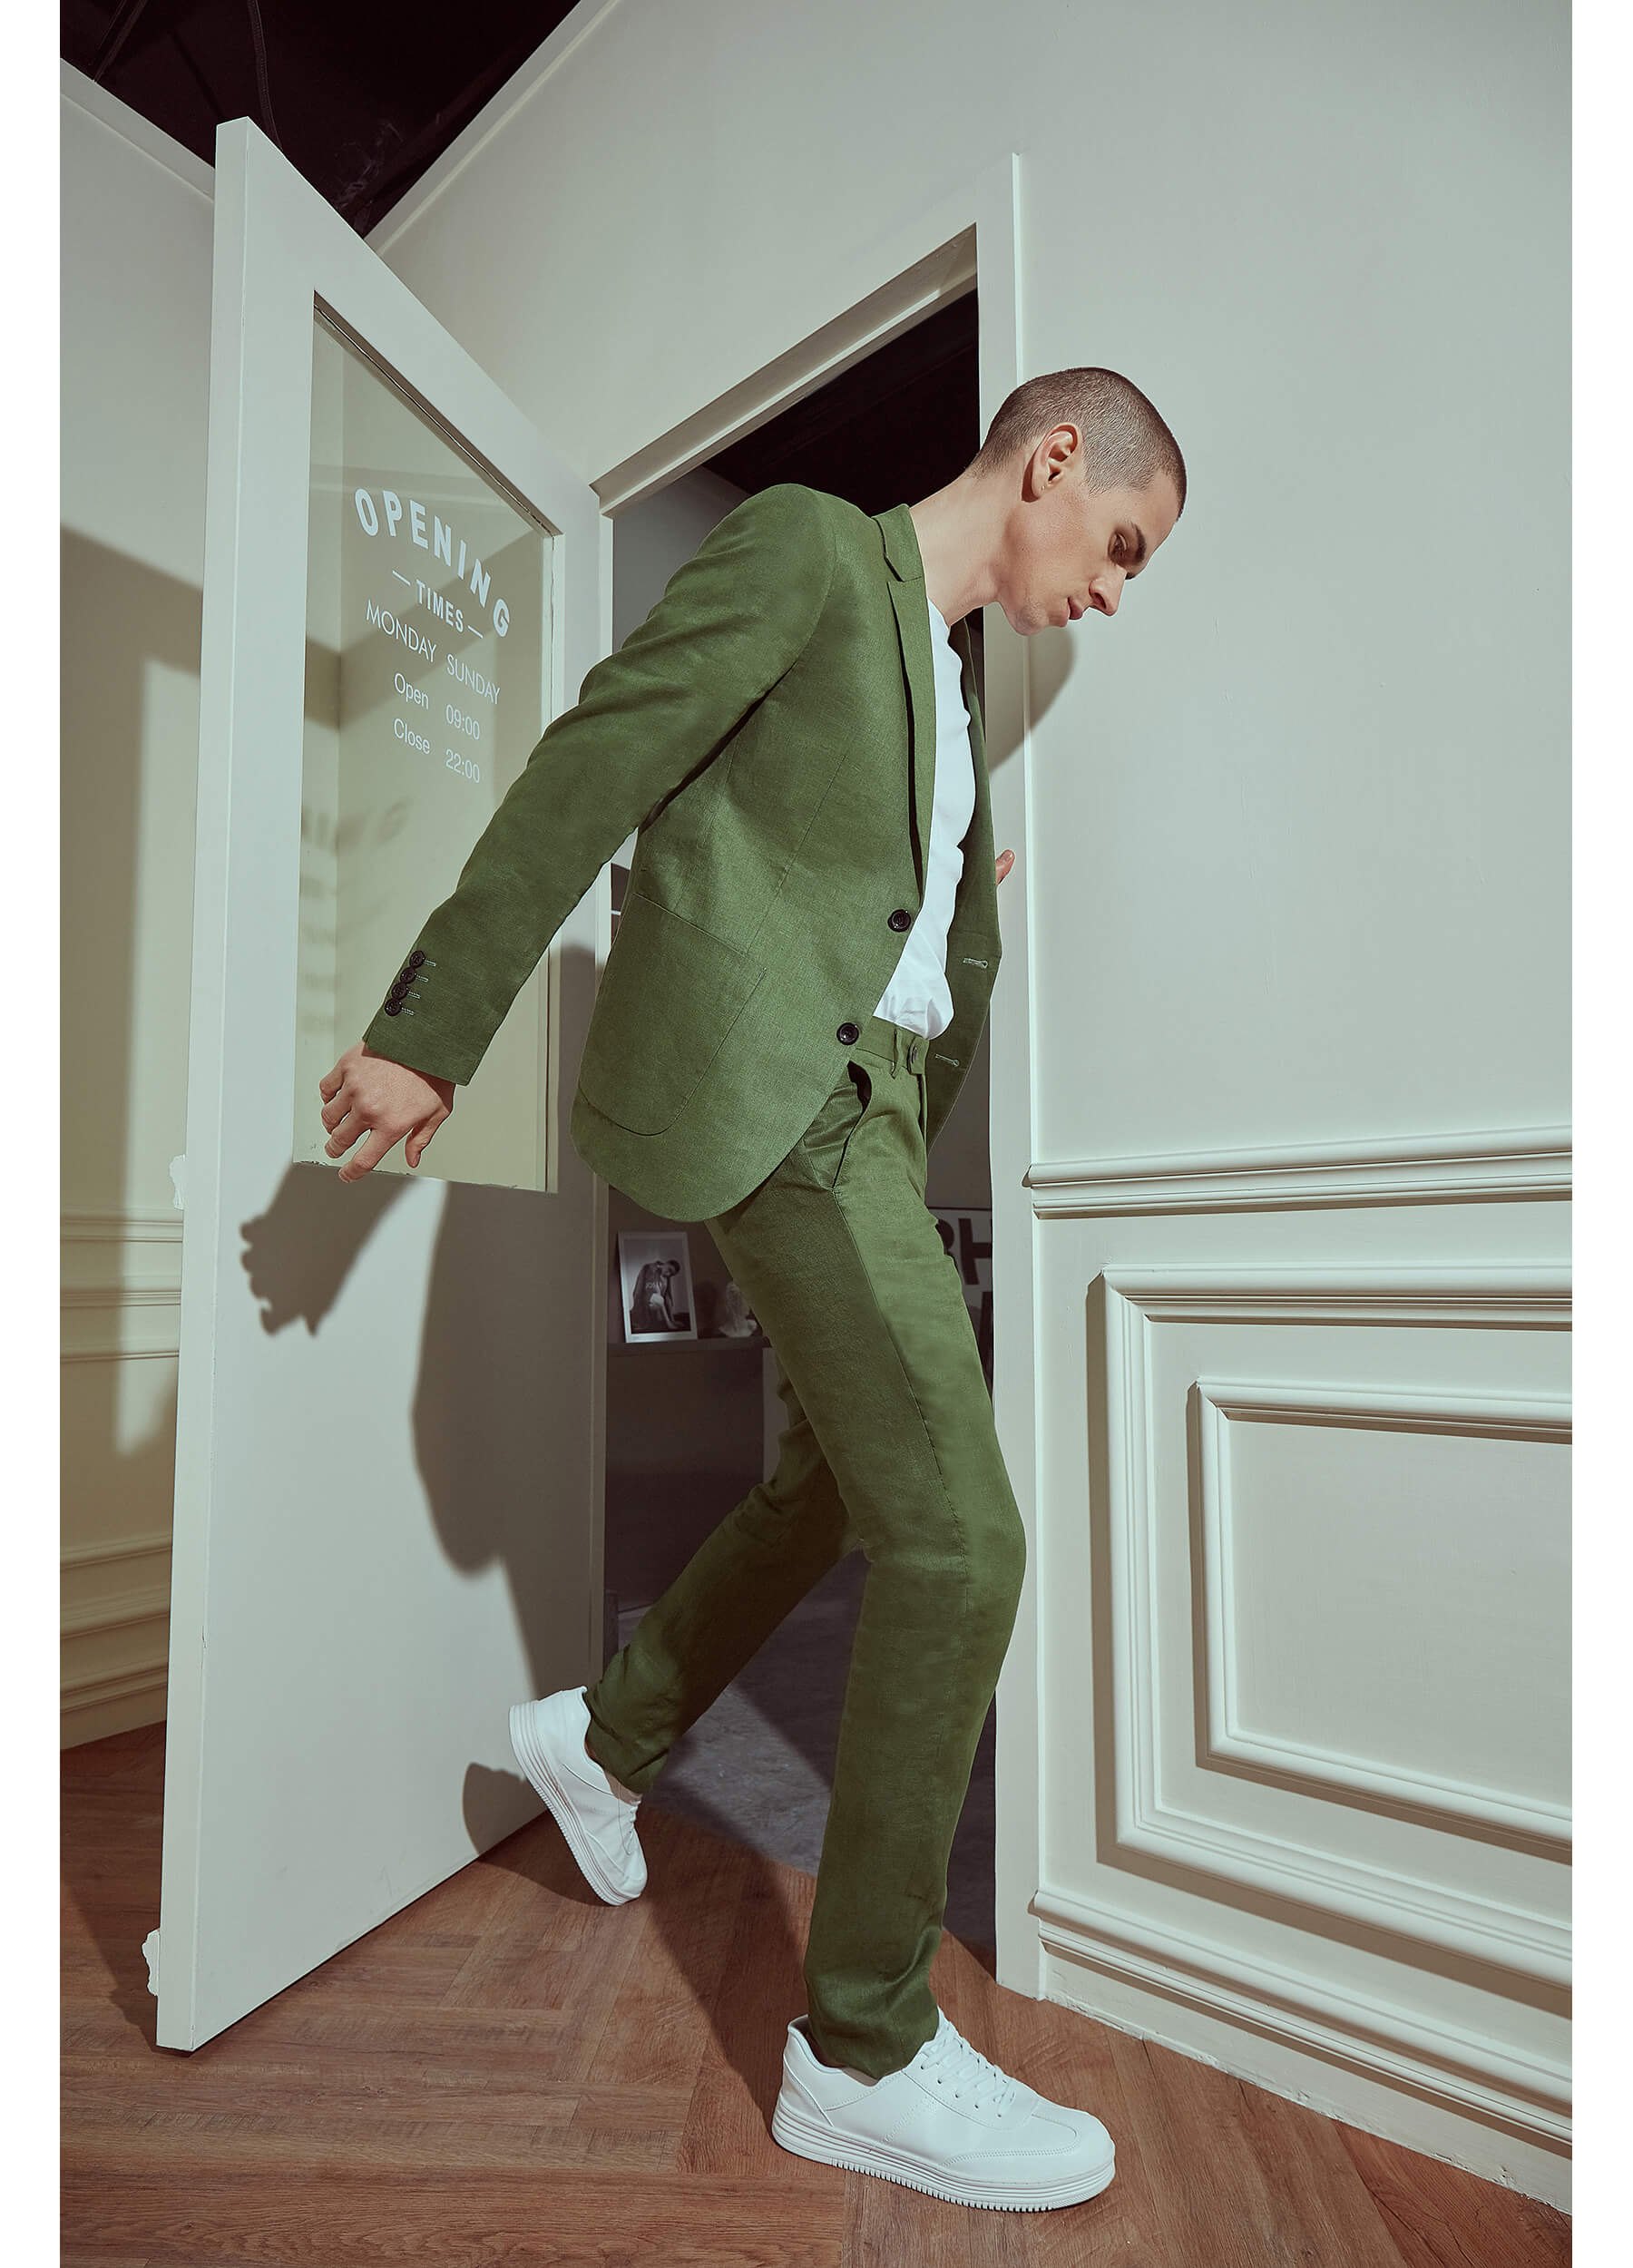 Olive green linen suit